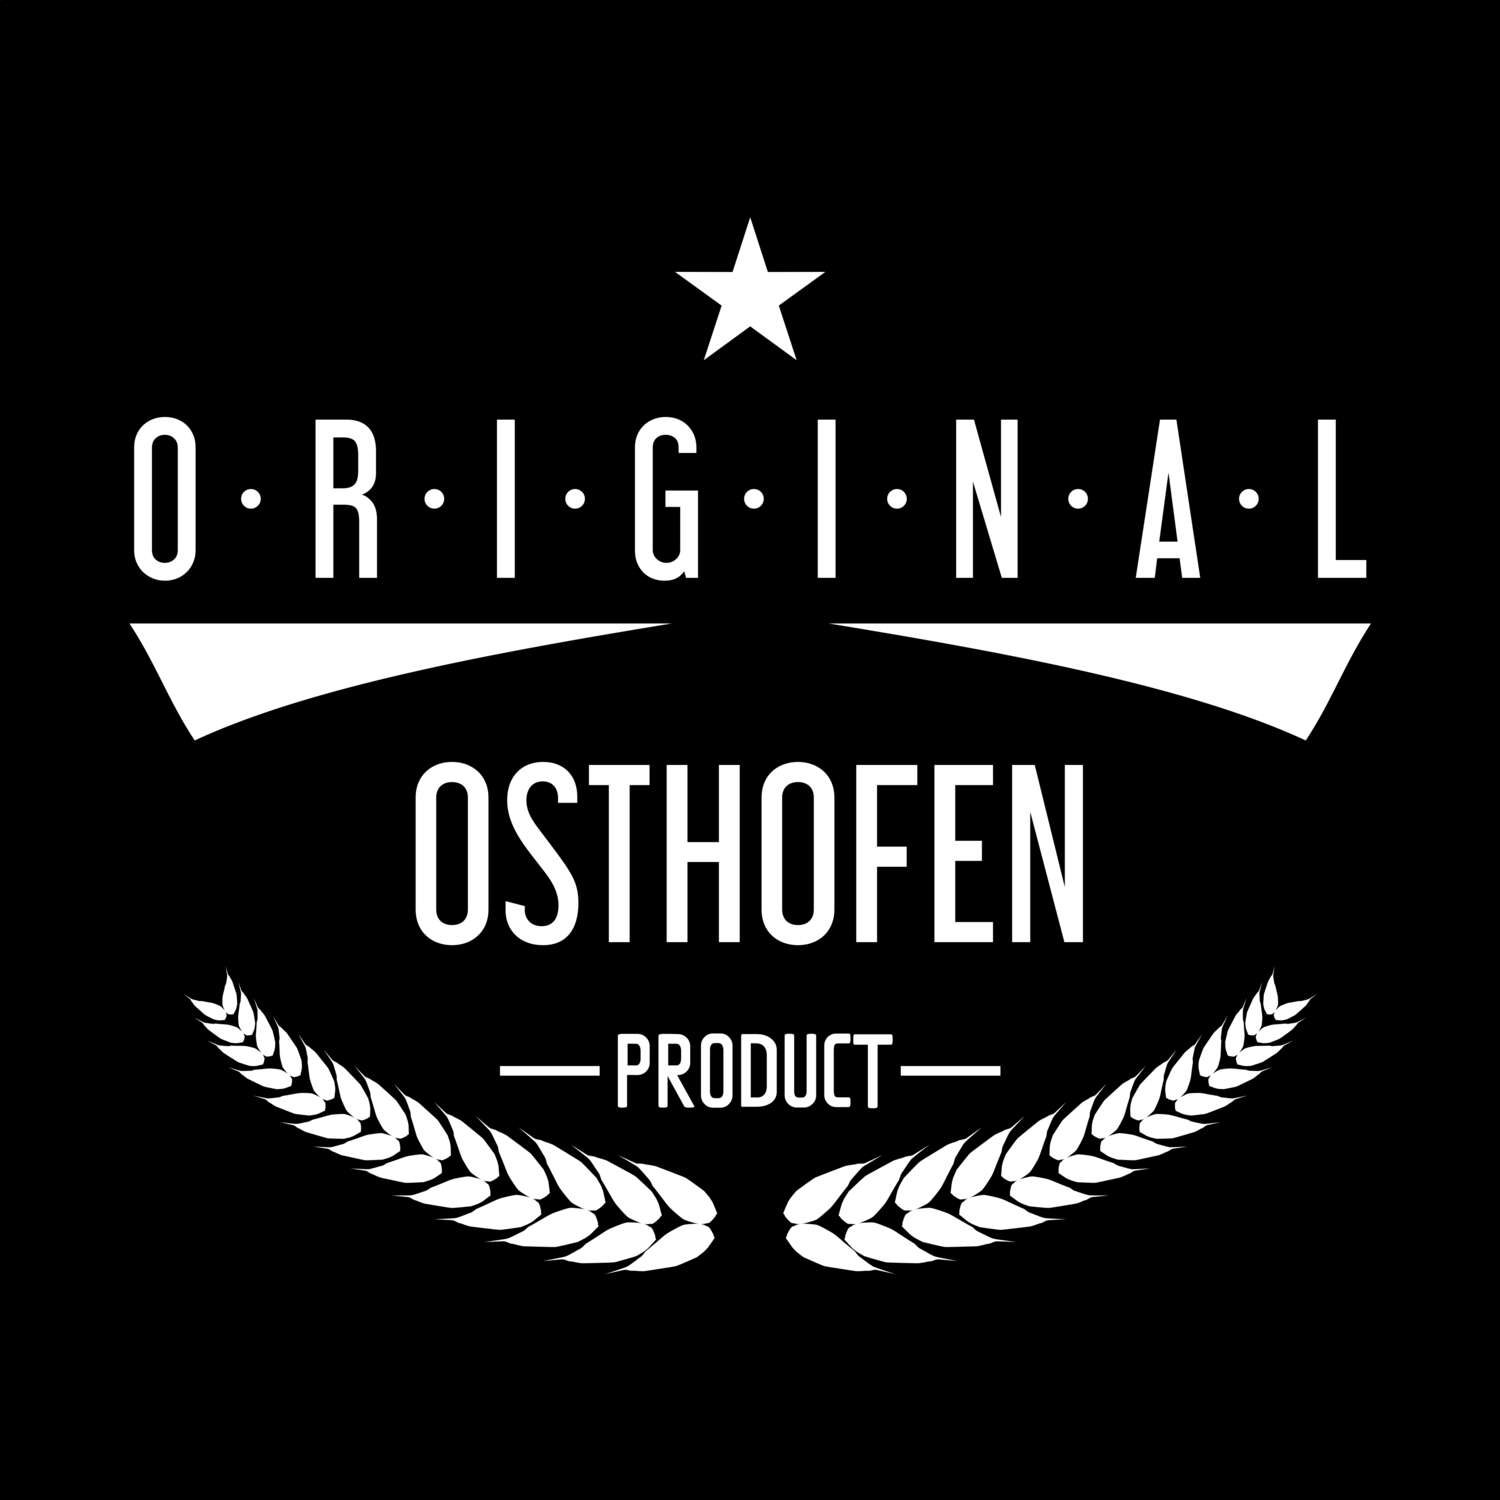 Osthofen T-Shirt »Original Product«